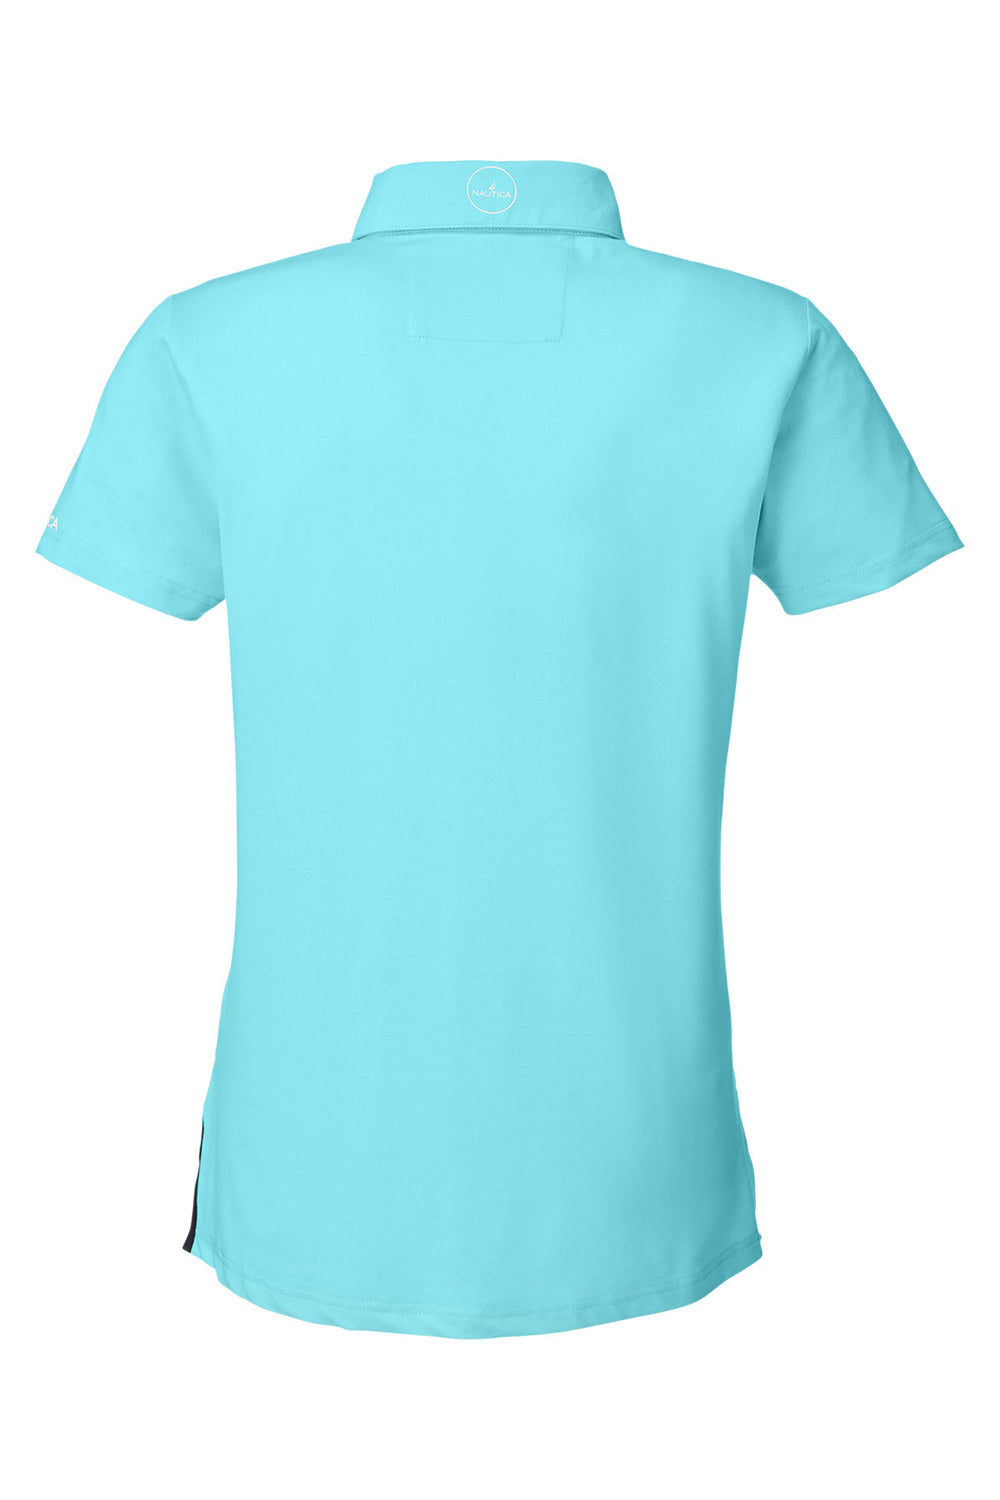 Nautica N17923 Womens Saltwater Short Sleeve Polo Shirt Sea Mist Blue Flat Back